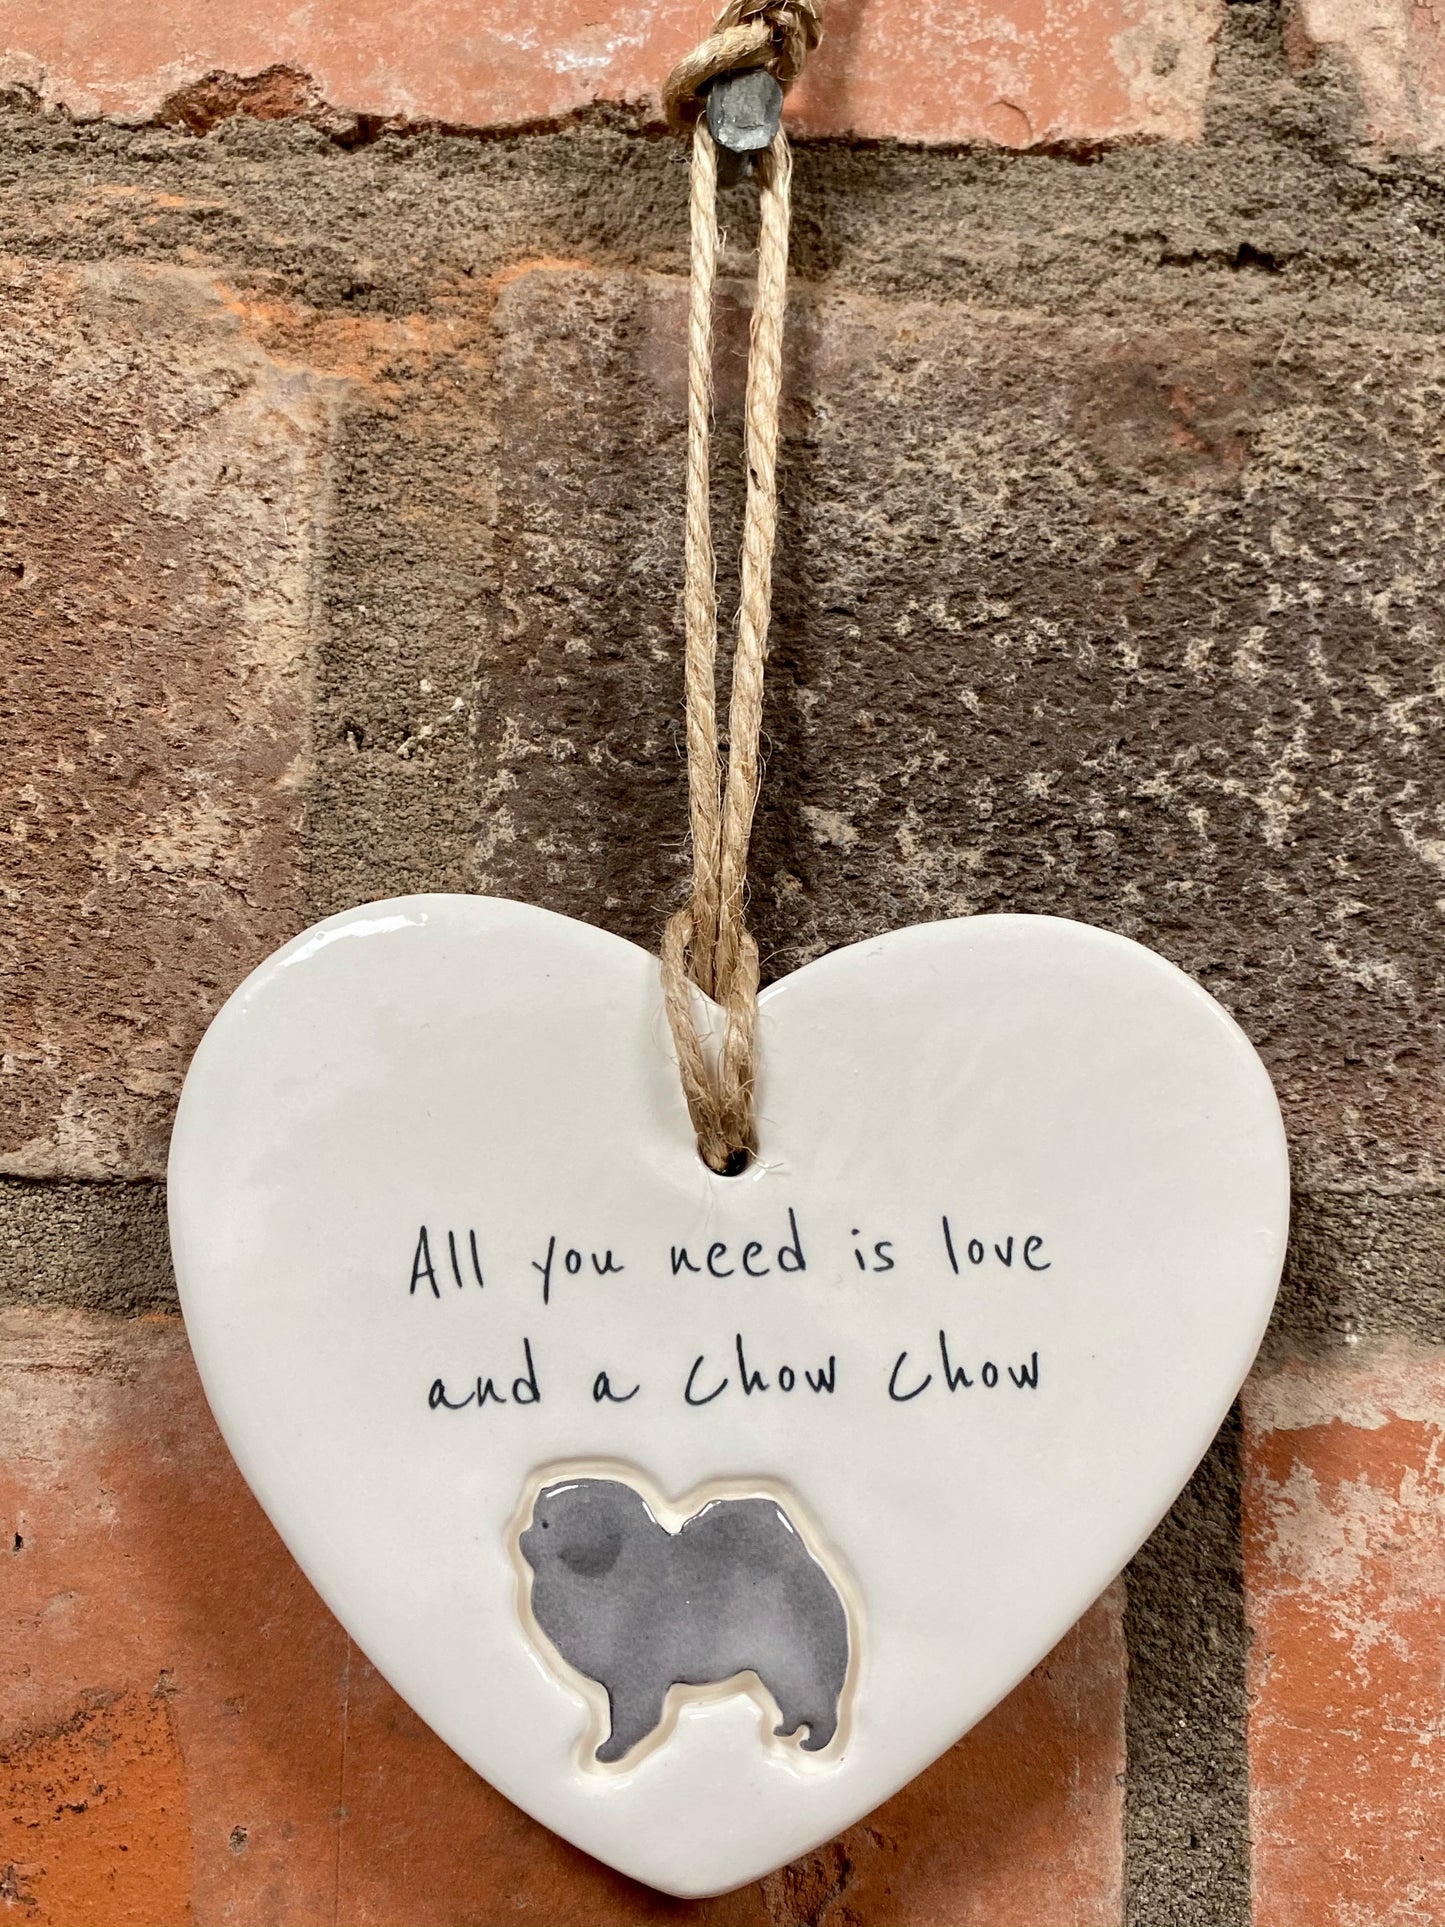 Chow Chow ceramic heart